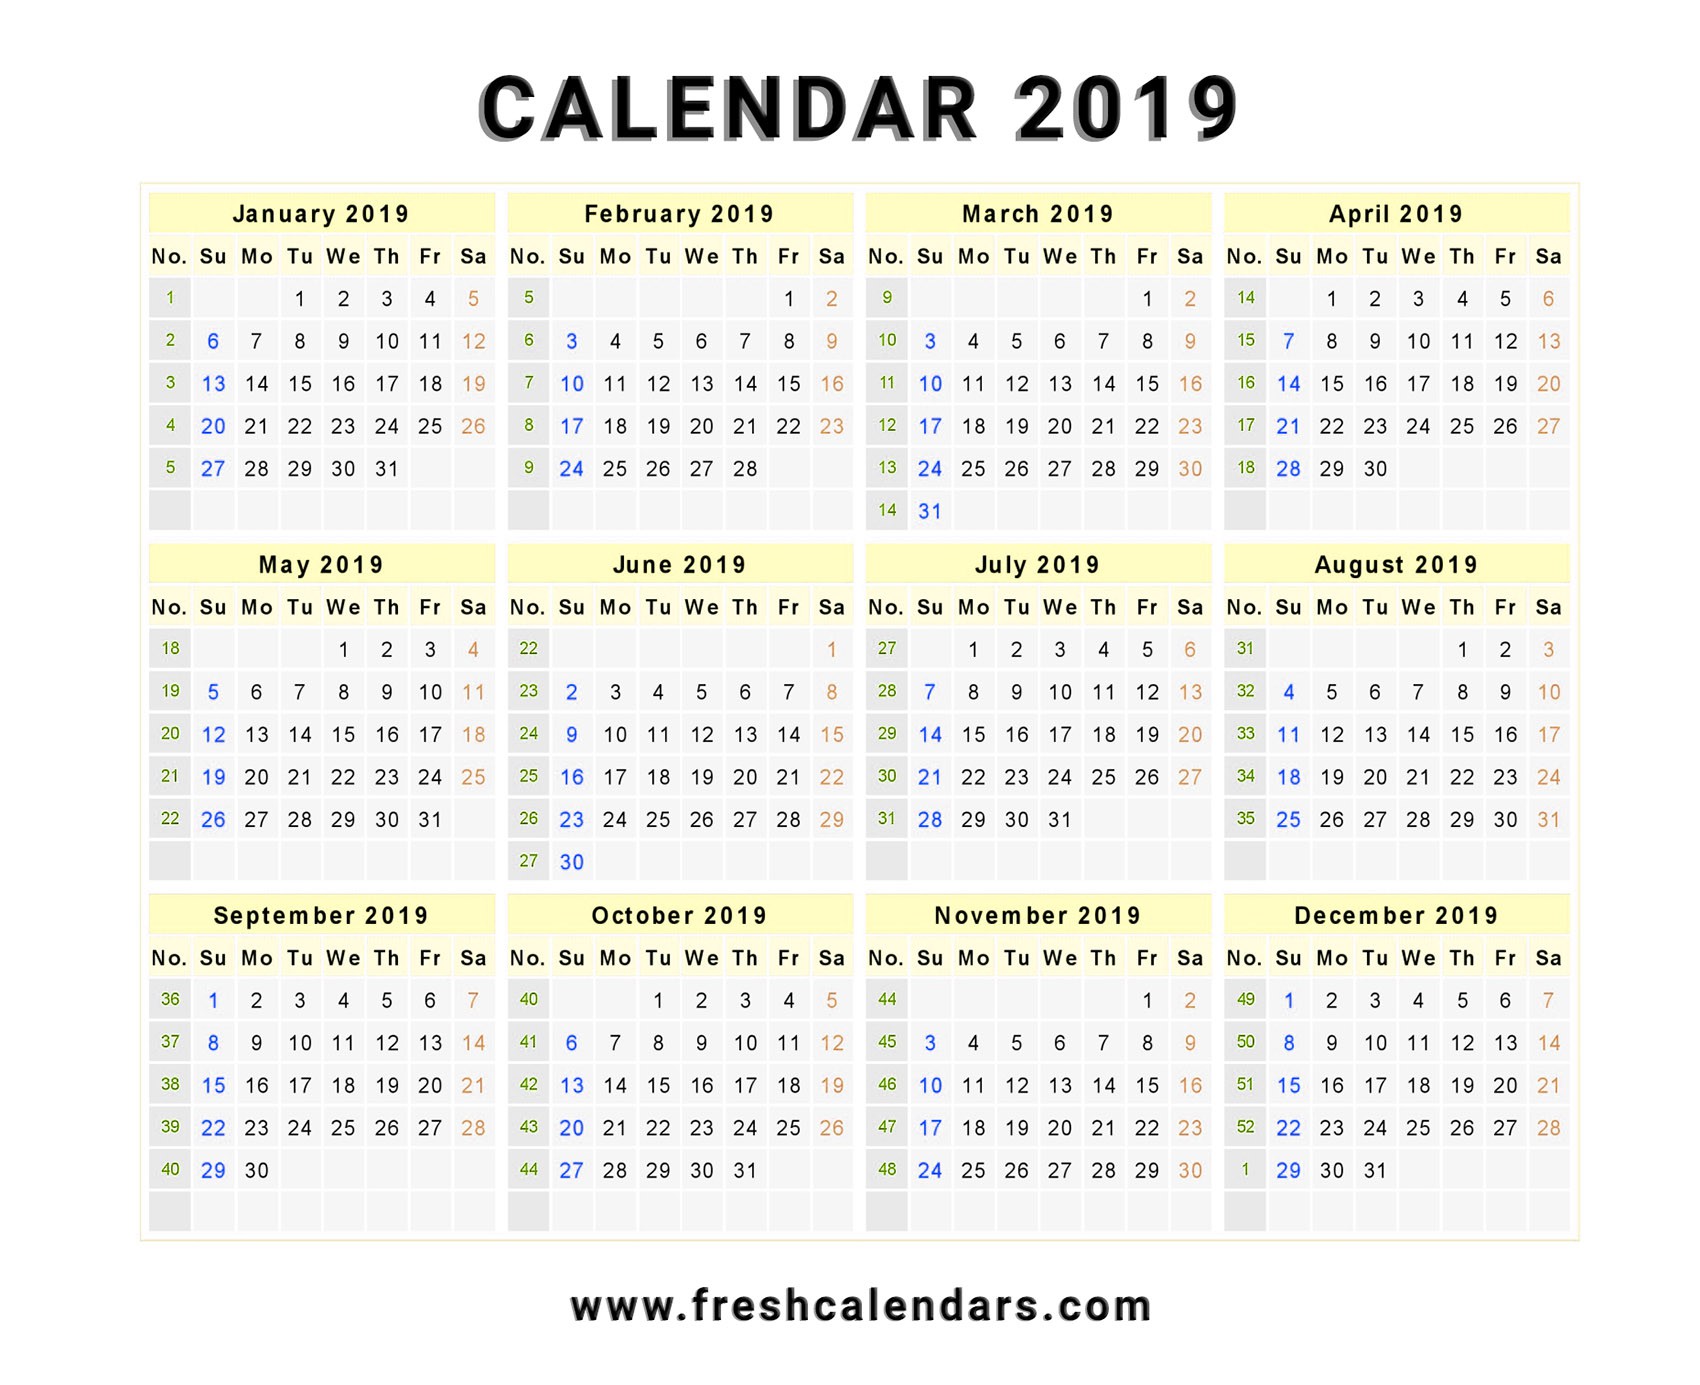 2019 Calendar FREE DOWNLOAD Your Calendar Guy